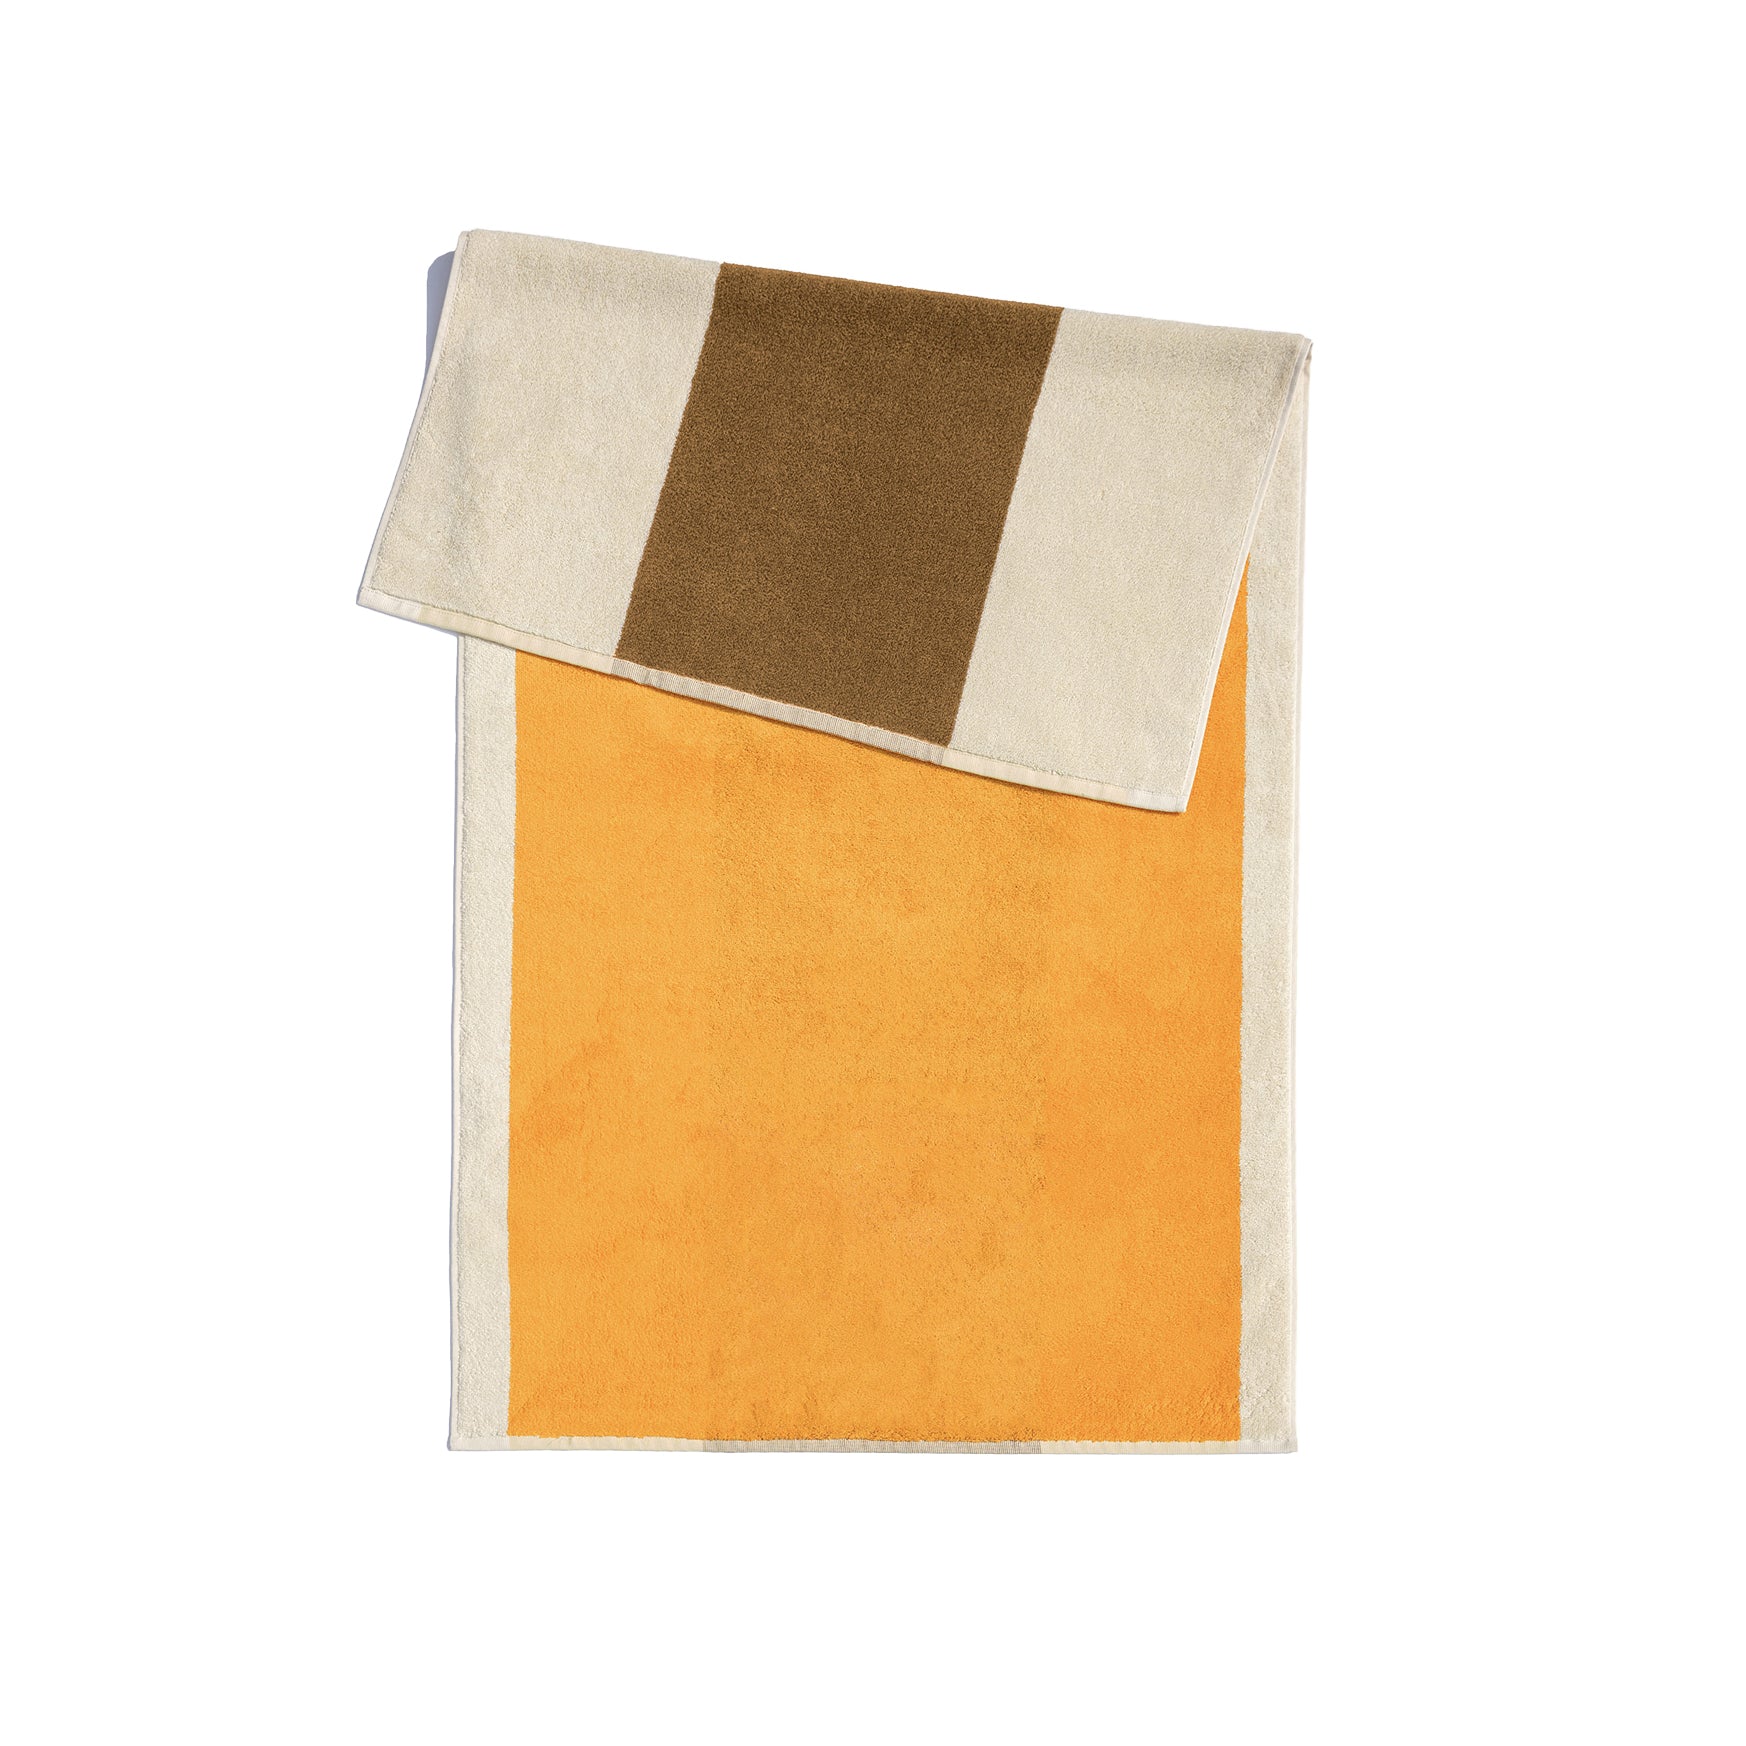 Handdoek 50x100 Sunny Yellow&Honey│Martens&Martens-Suite702│art. MMTT50SYHO│achterkant met witte achtergrond